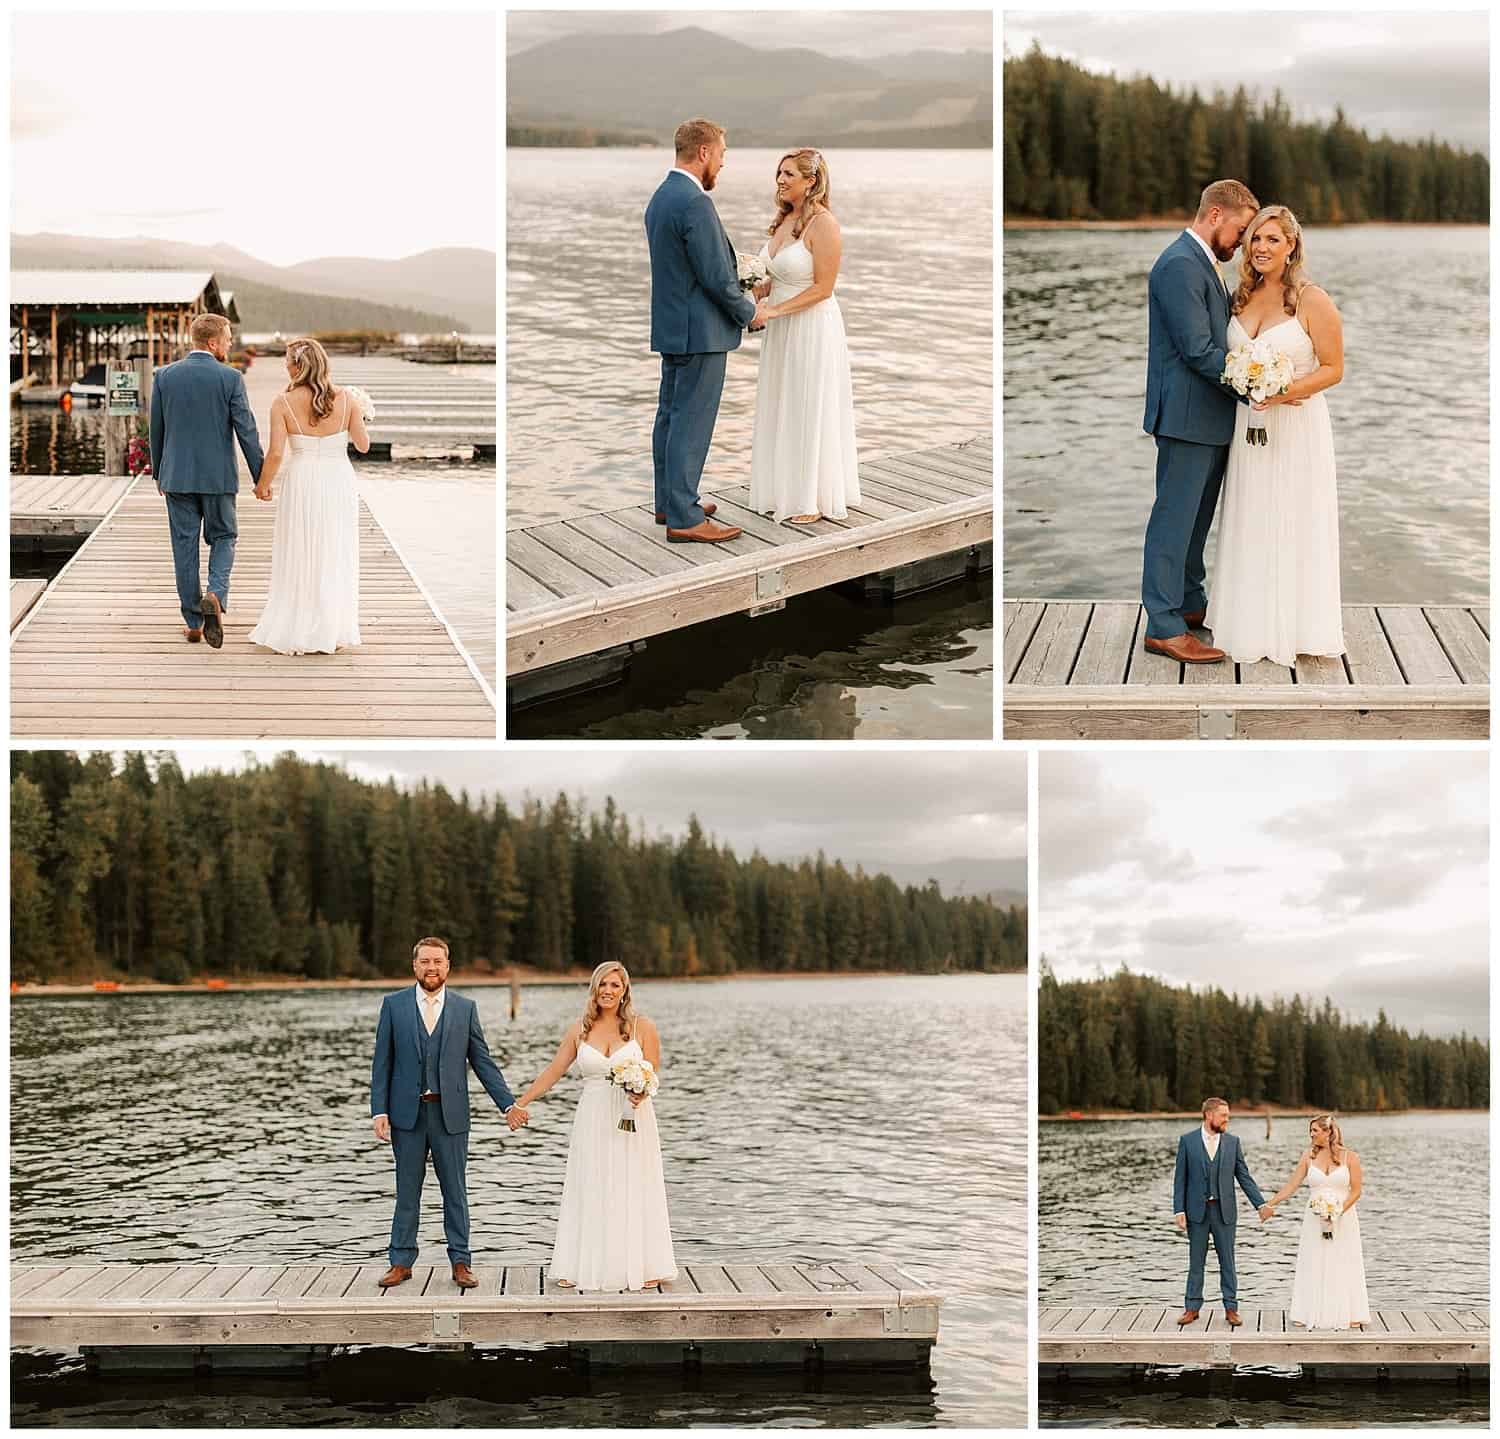 Dock wedding photos at Elkins Resort on Priest Lake, Idaho